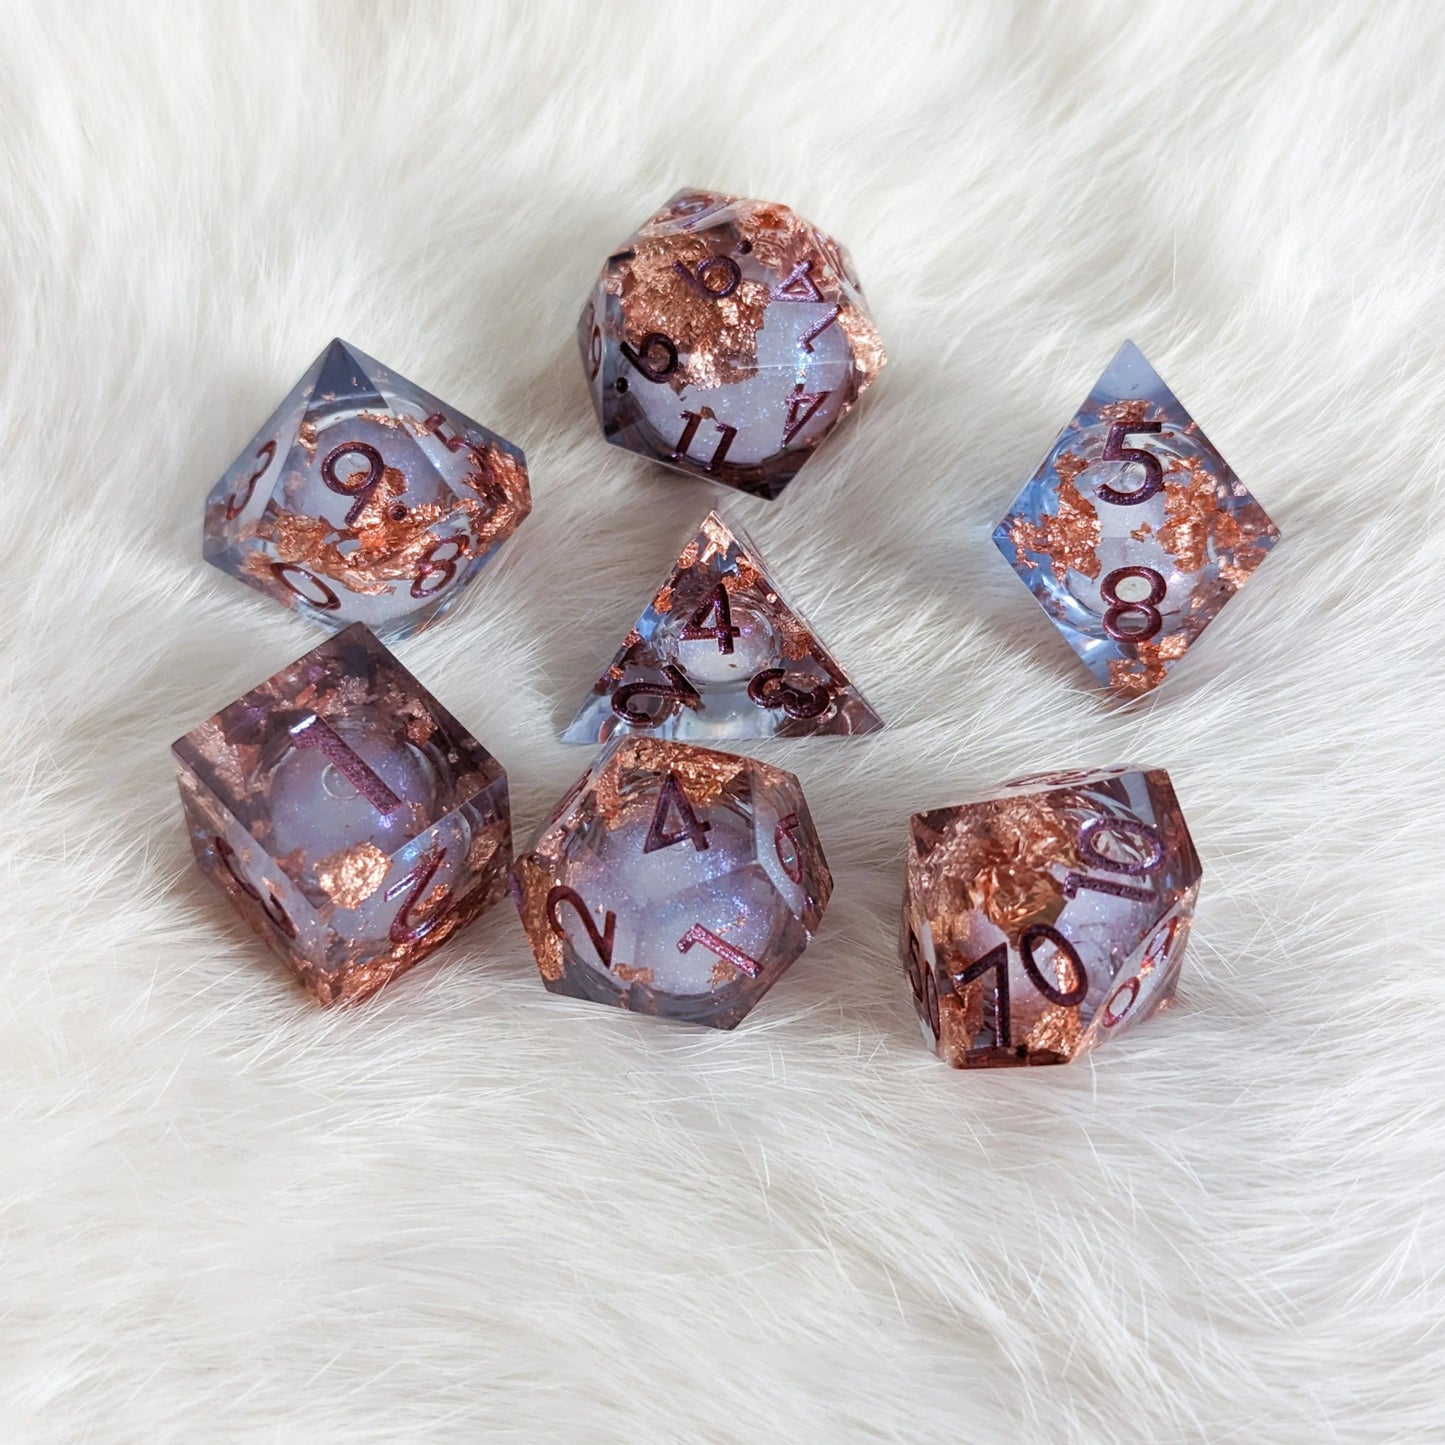 Crimson and Copper - Set of 7 Liquid Core dice (Sharp Edges) - The Fourth Place